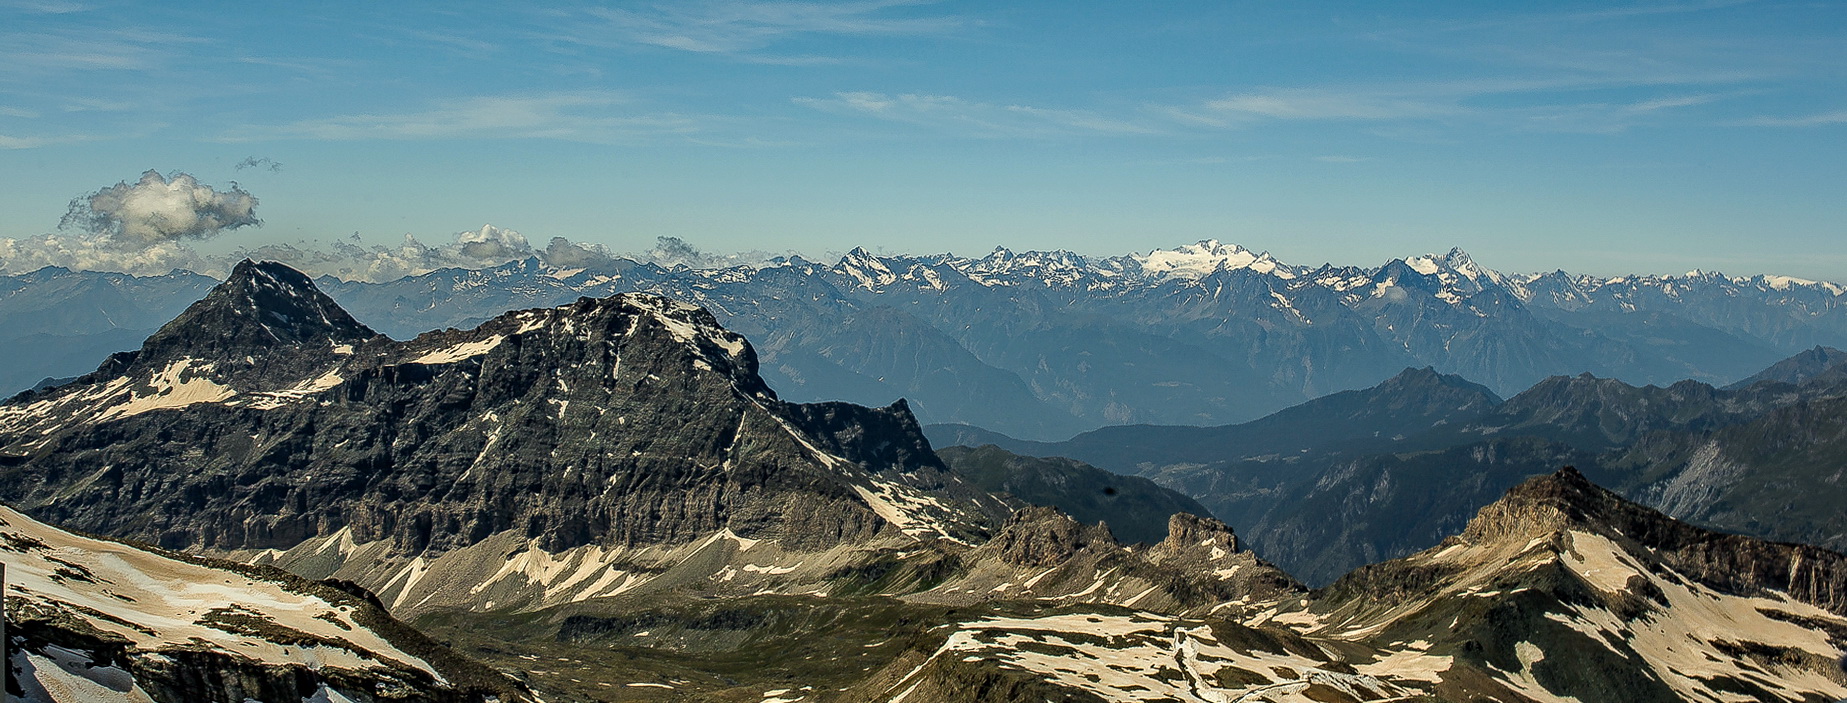 The Alps 2014 Italy Matterhorn 5